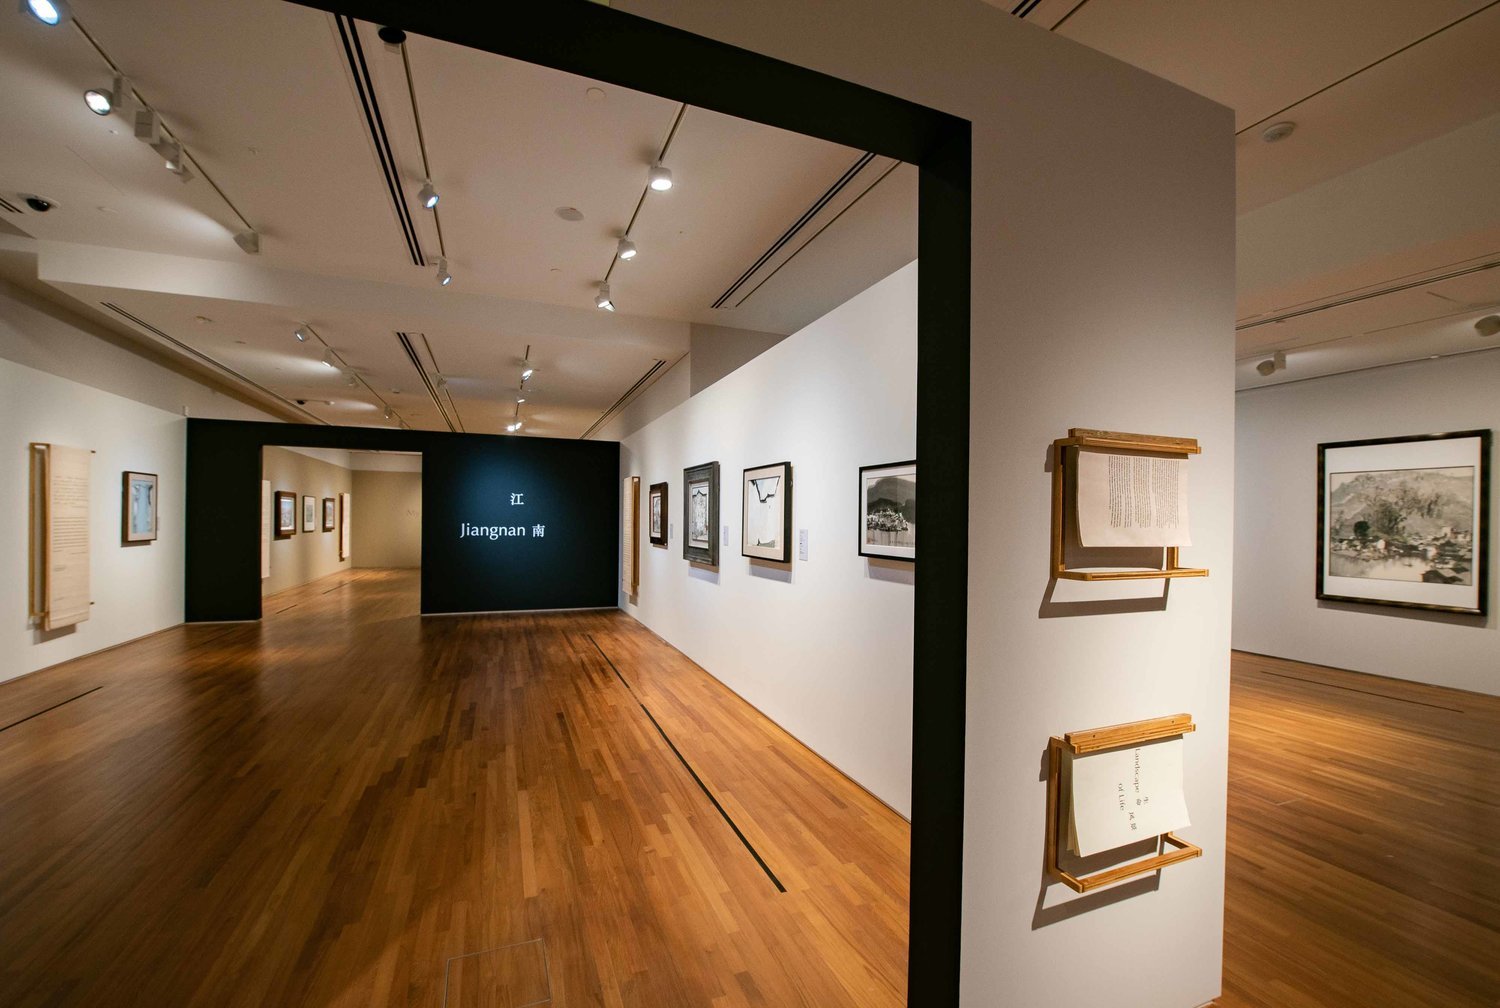 Review of 'Awakenings' at National Gallery Singapore — Art & Market